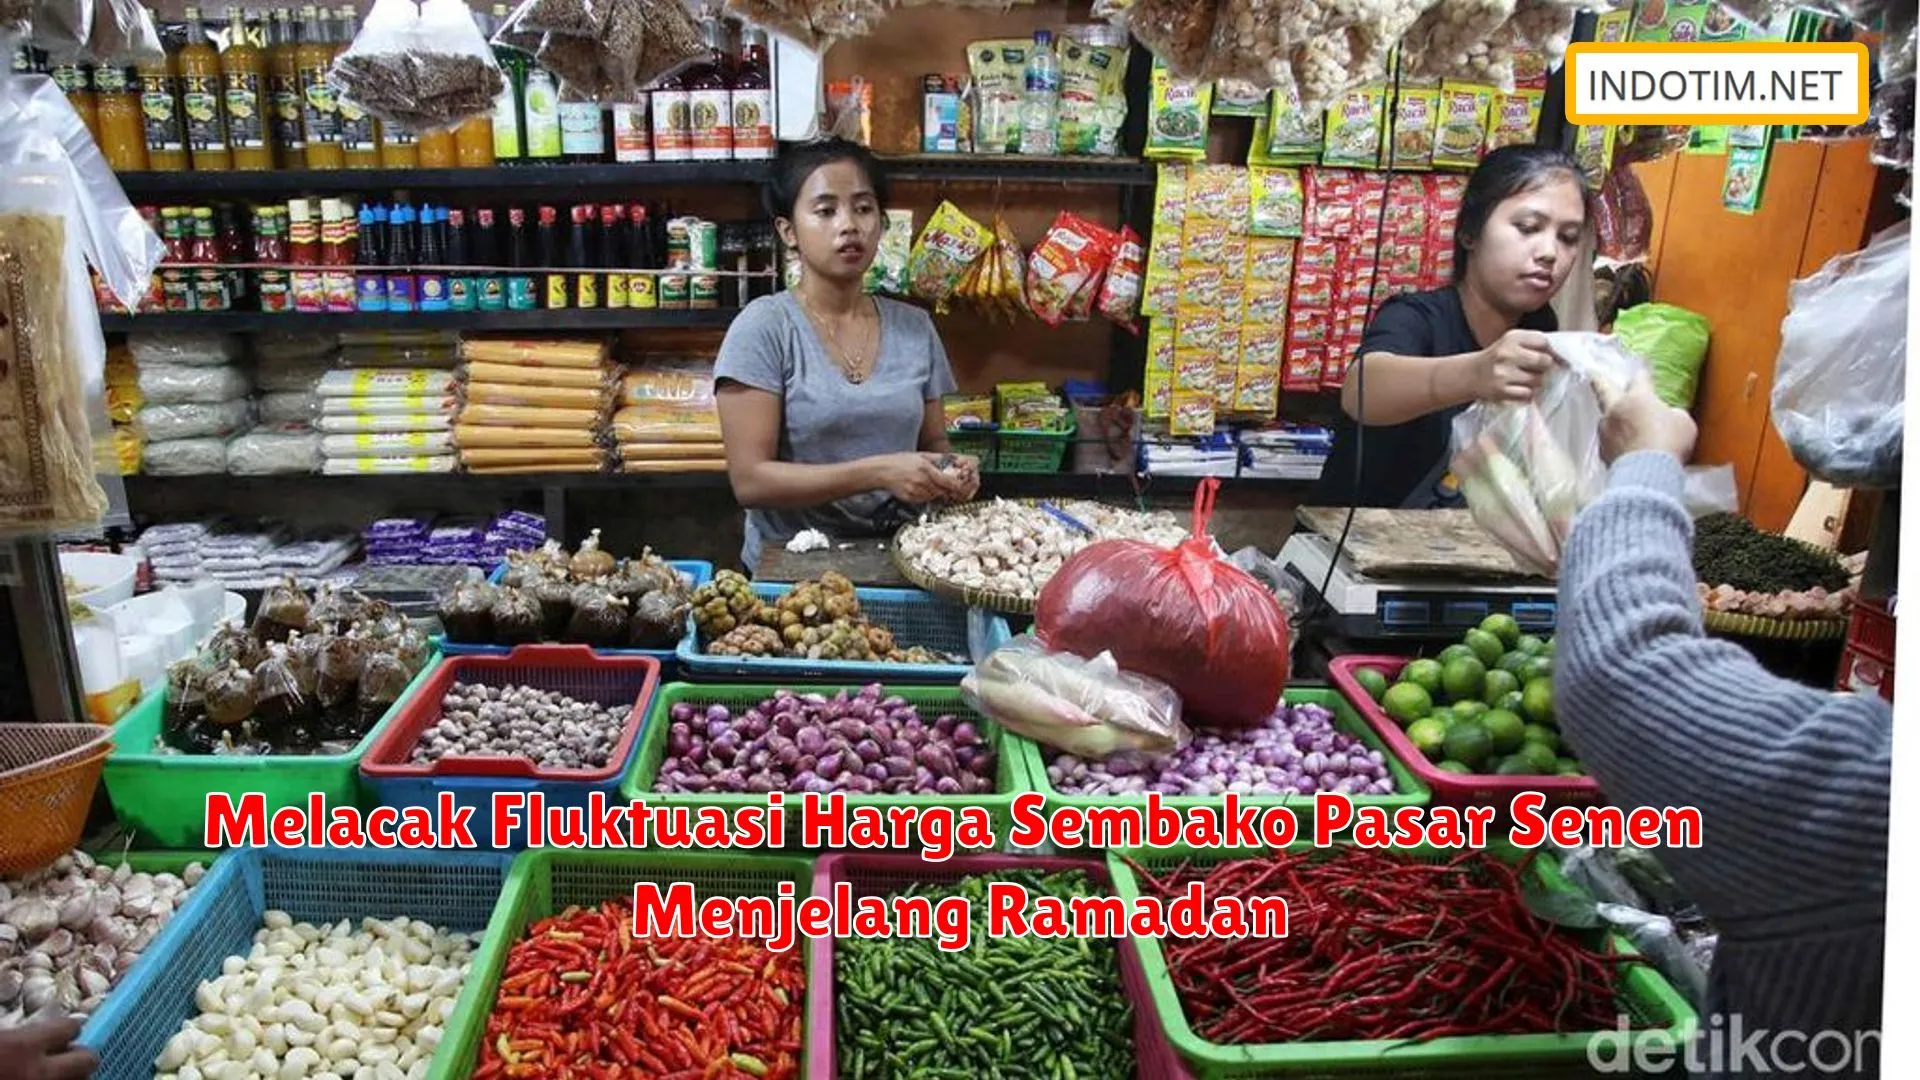 Melacak Fluktuasi Harga Sembako Pasar Senen Menjelang Ramadan